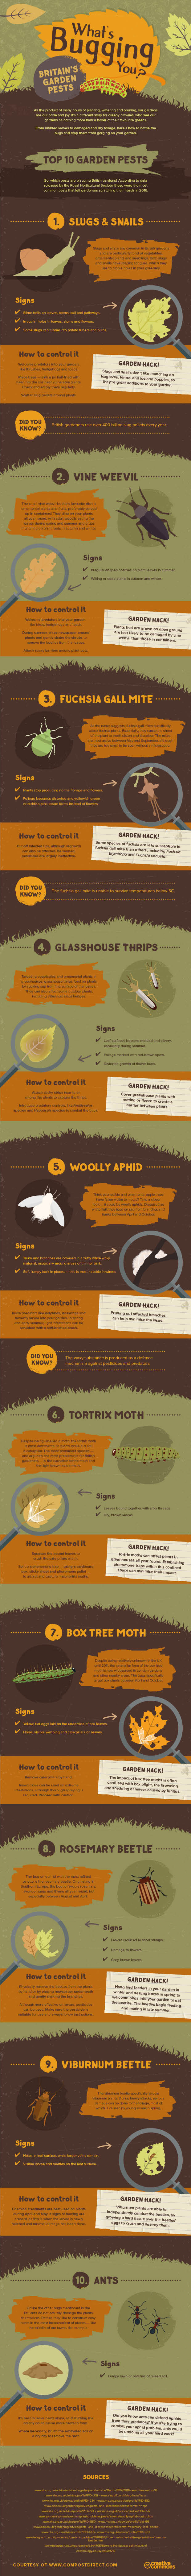 garden pests infographic